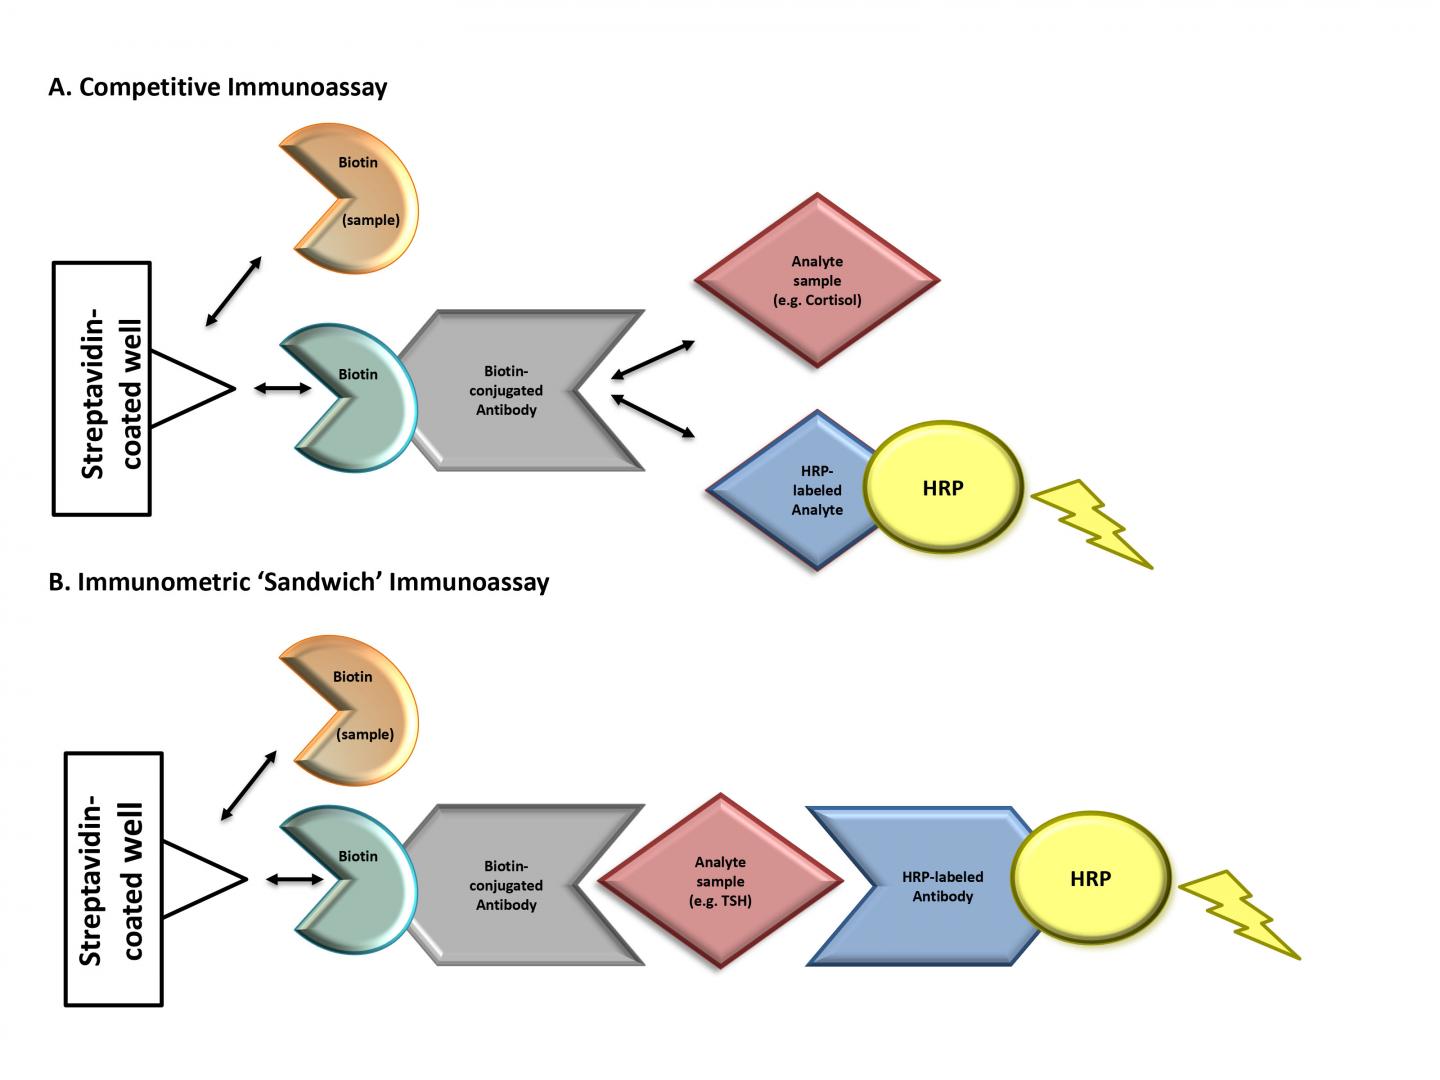 Figure 1. Mechanism of Biotin Interference with Immunoassay Methodologies